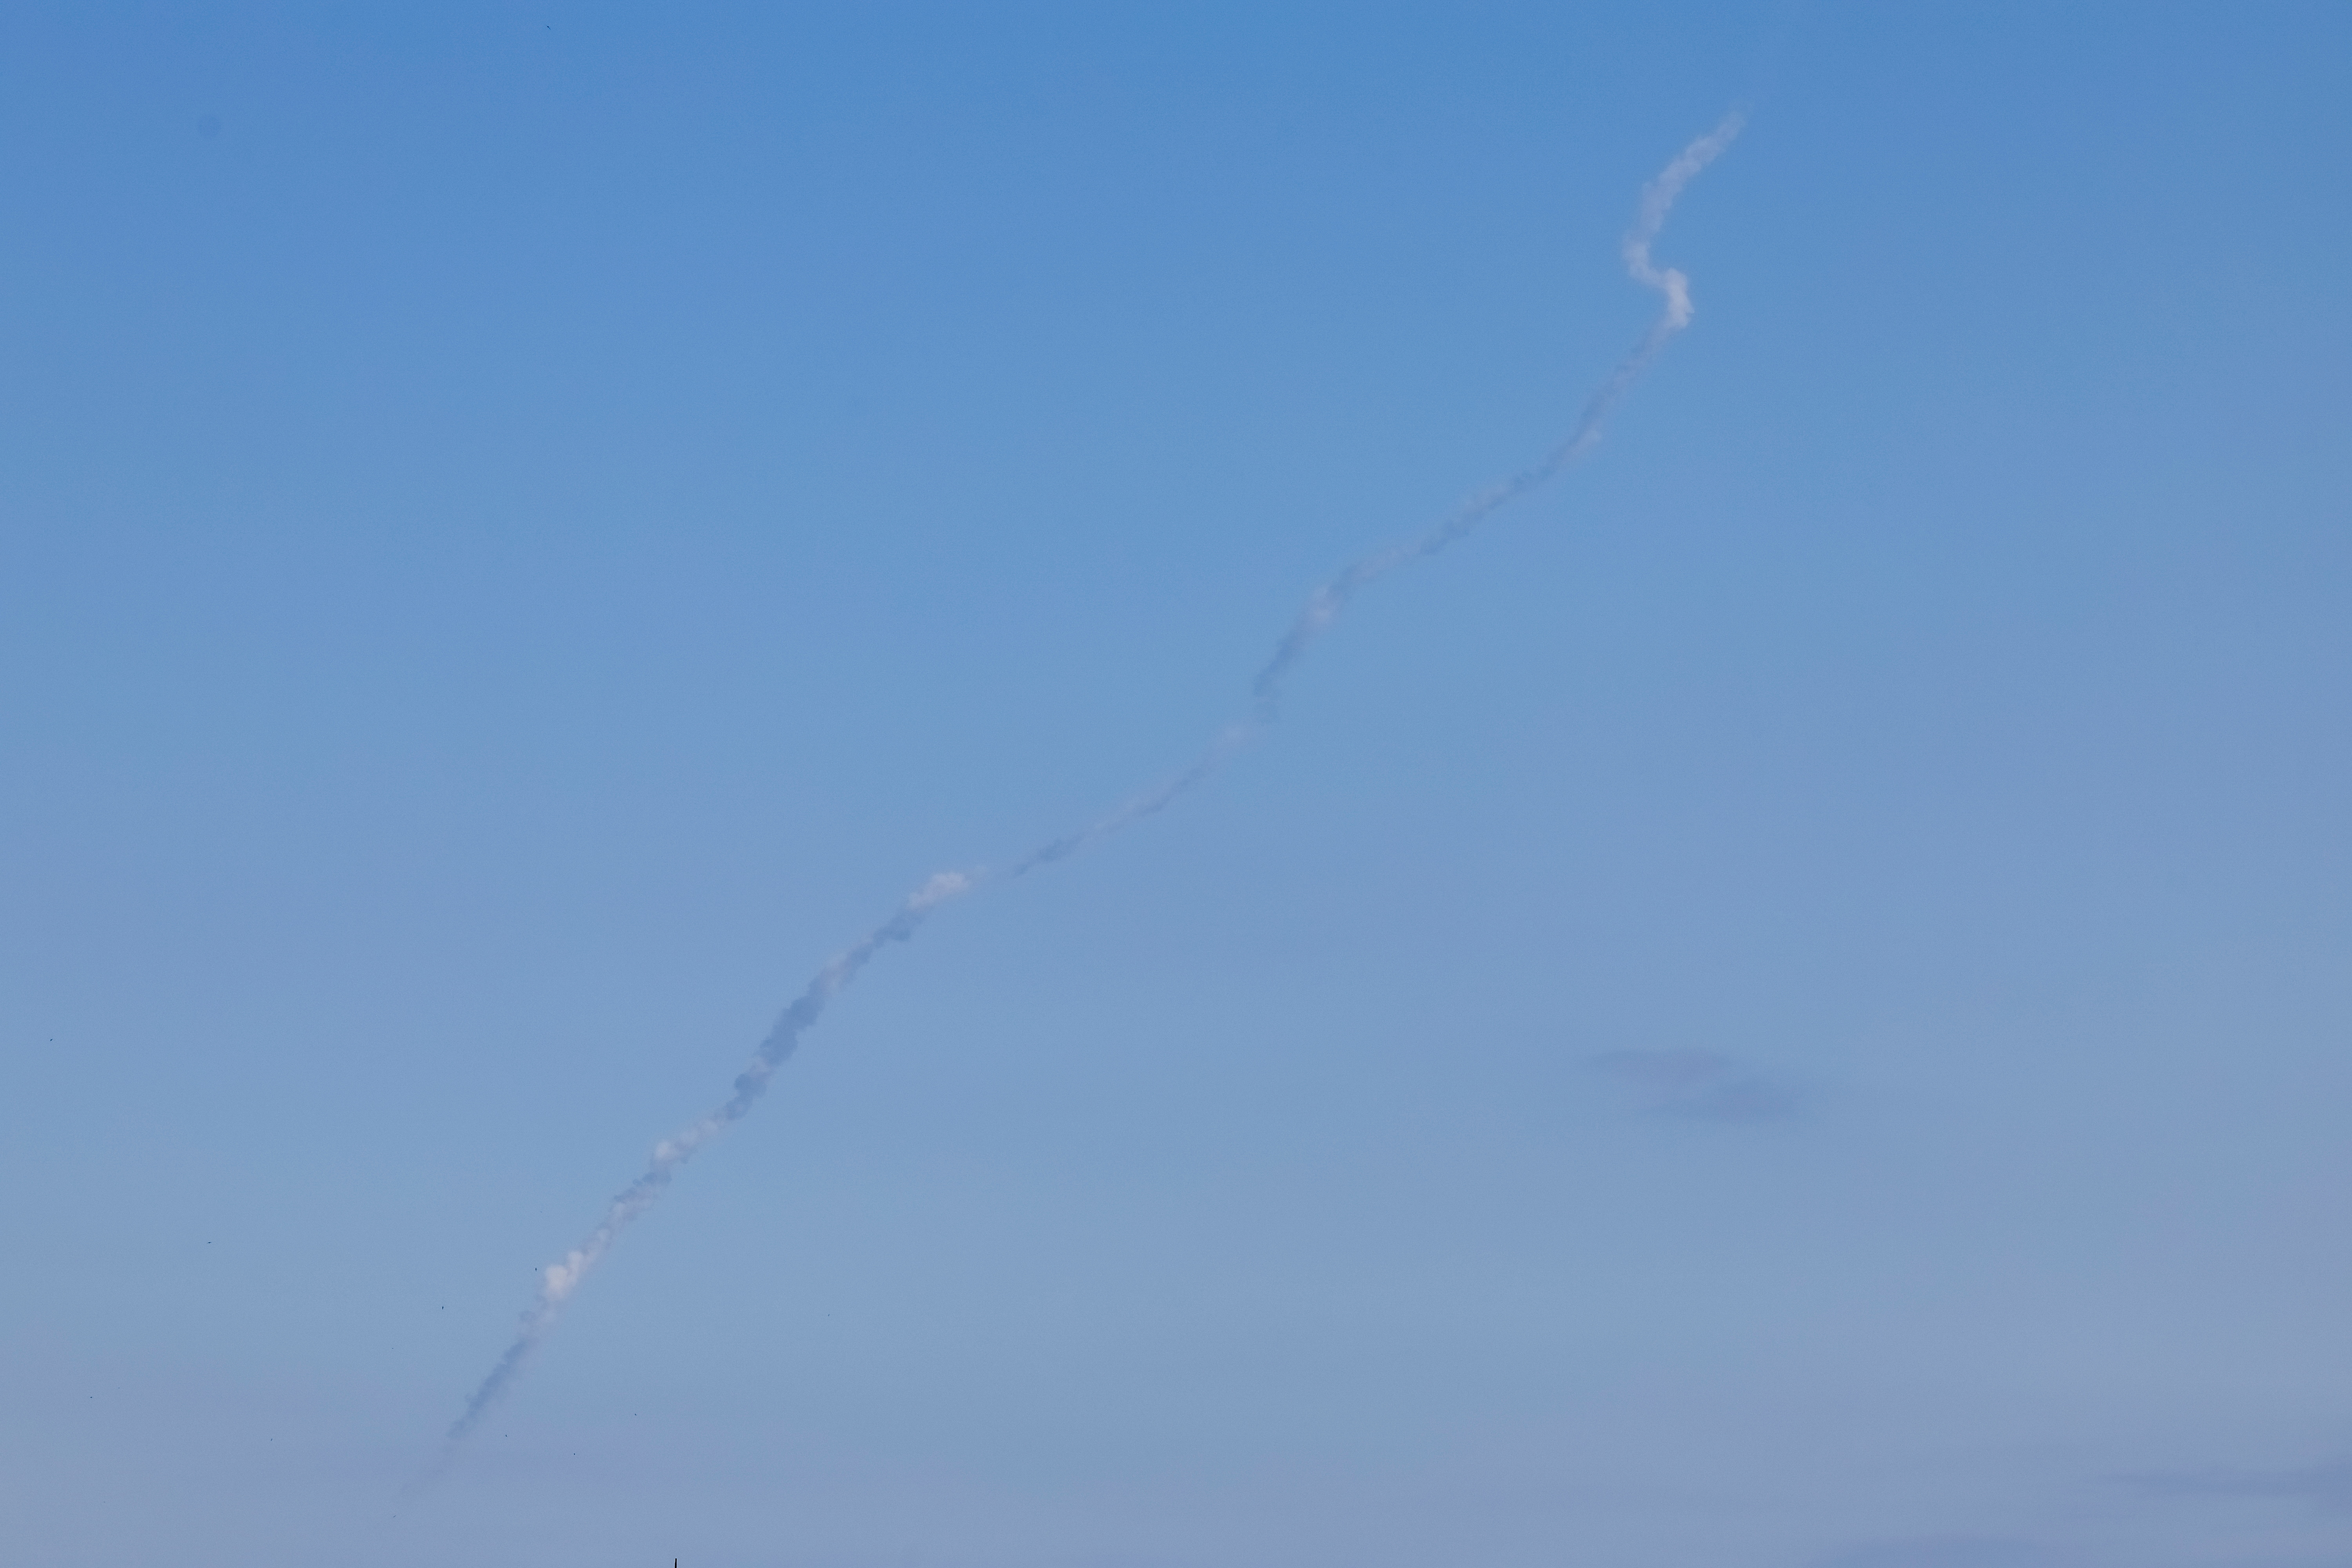 Russian missile strike in Kyiv